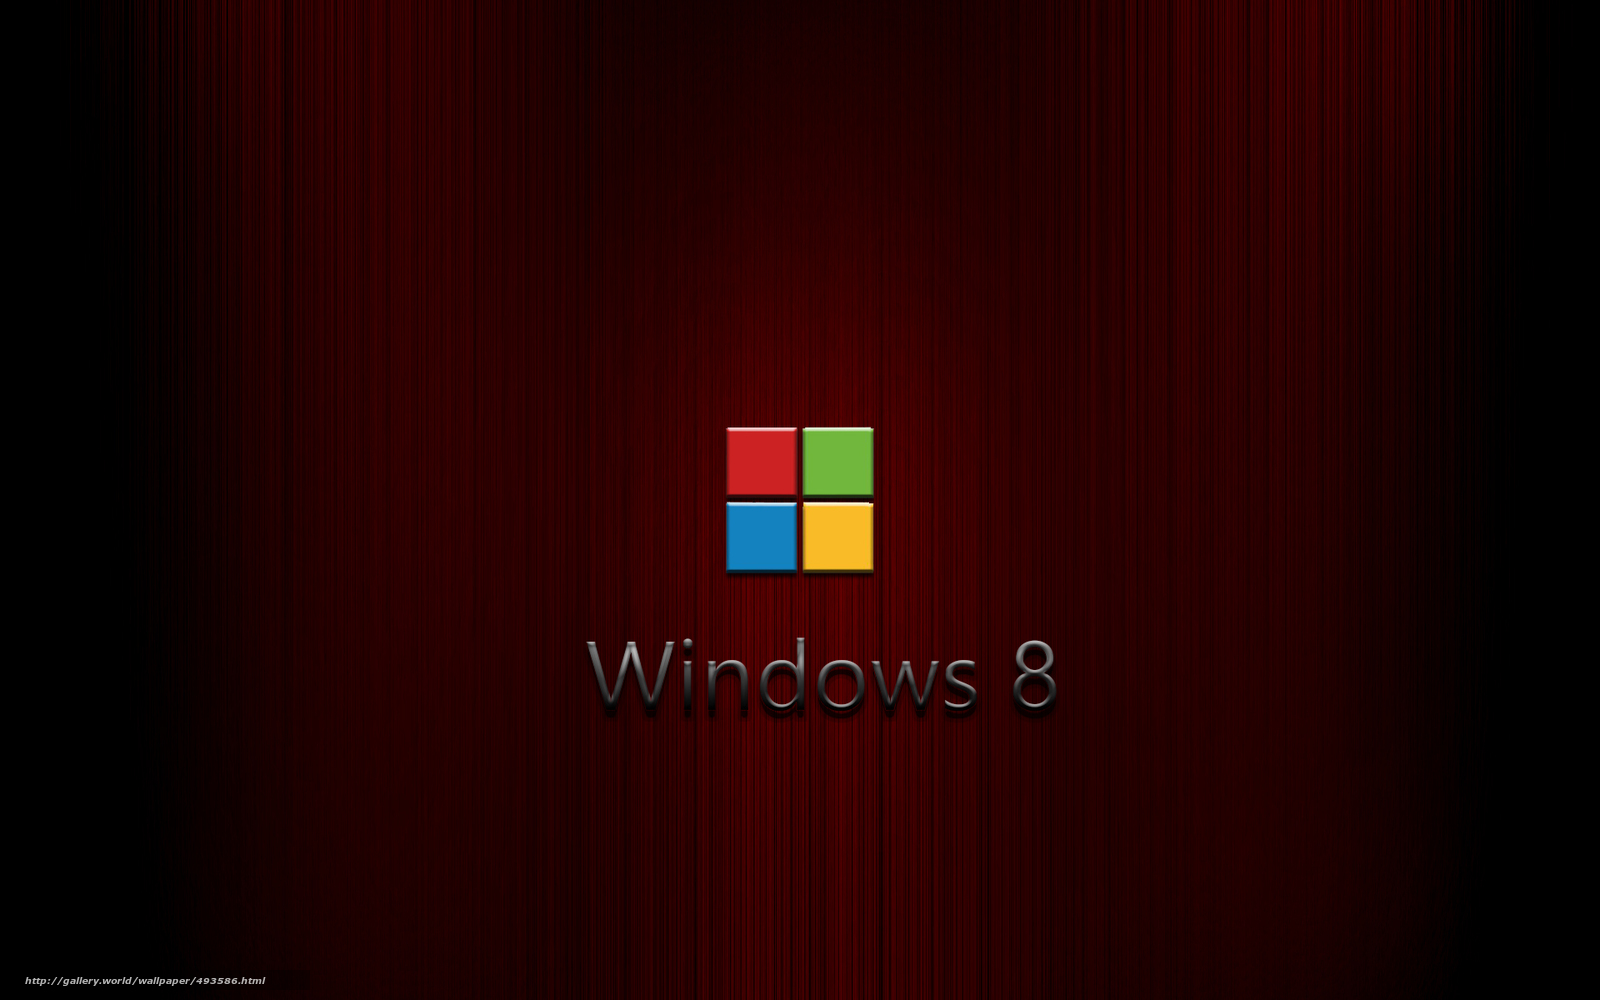 Download wallpaper windows 8 background free desktop wallpaper in